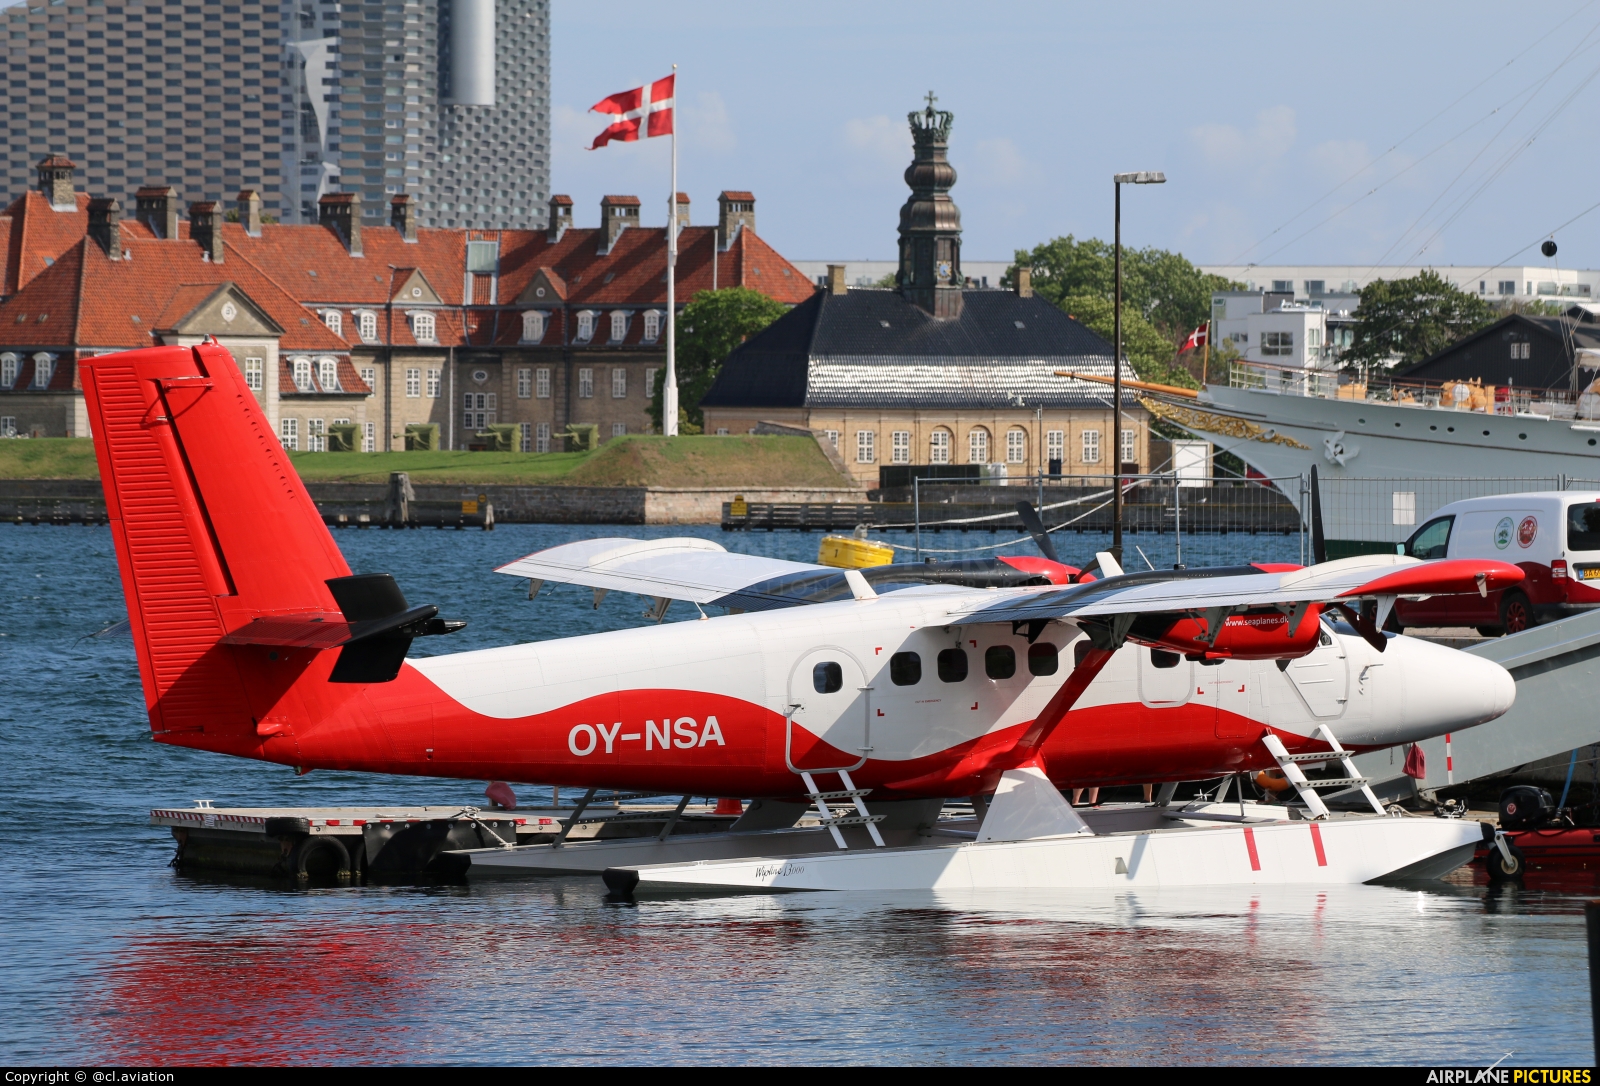 Nordic Seaplanes OY-NSA aircraft at Copenhagen harbour sea airport